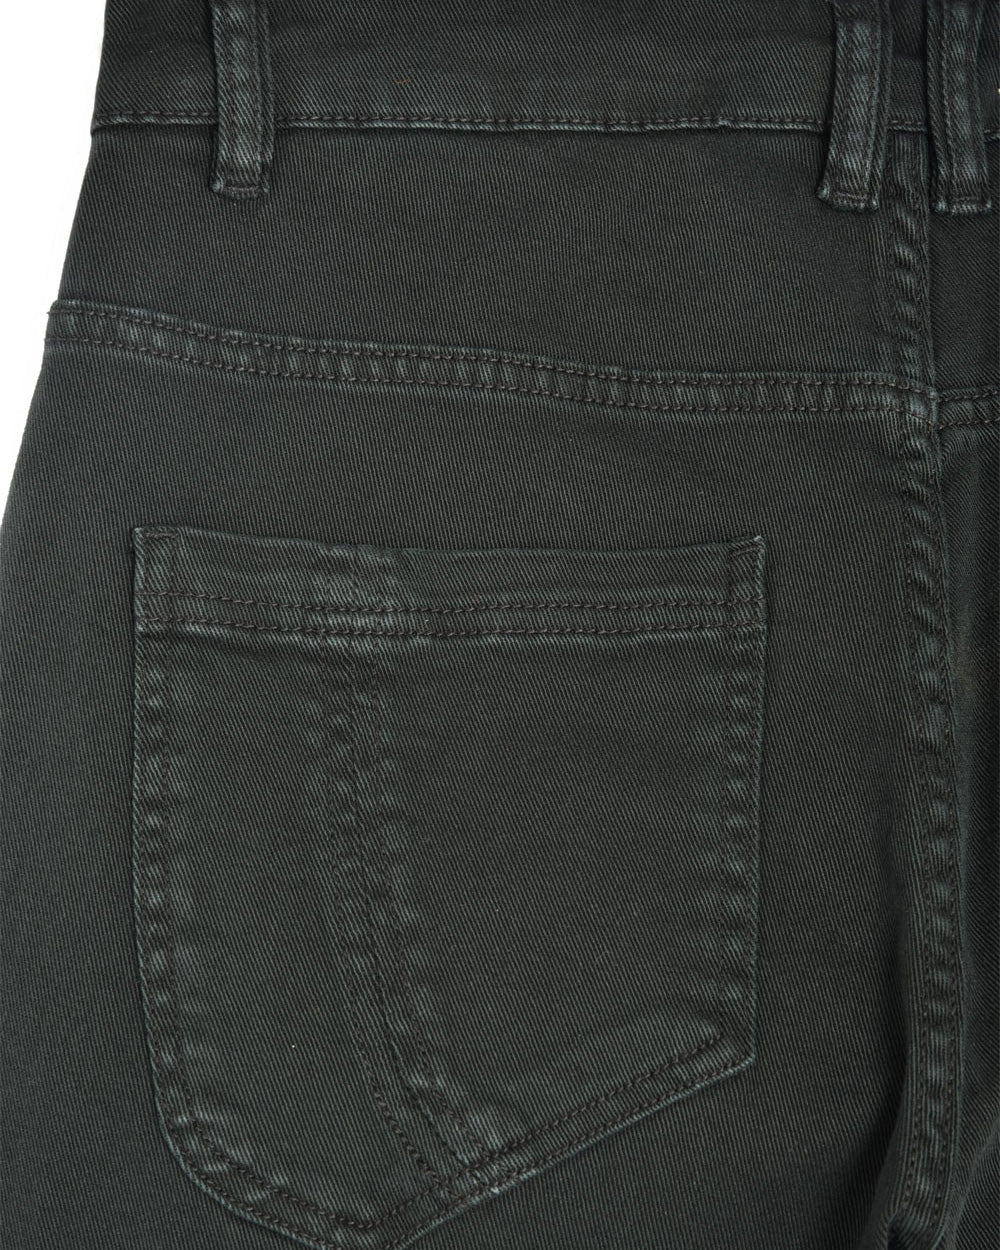 Men's 5-pocket jeans in distressed denim